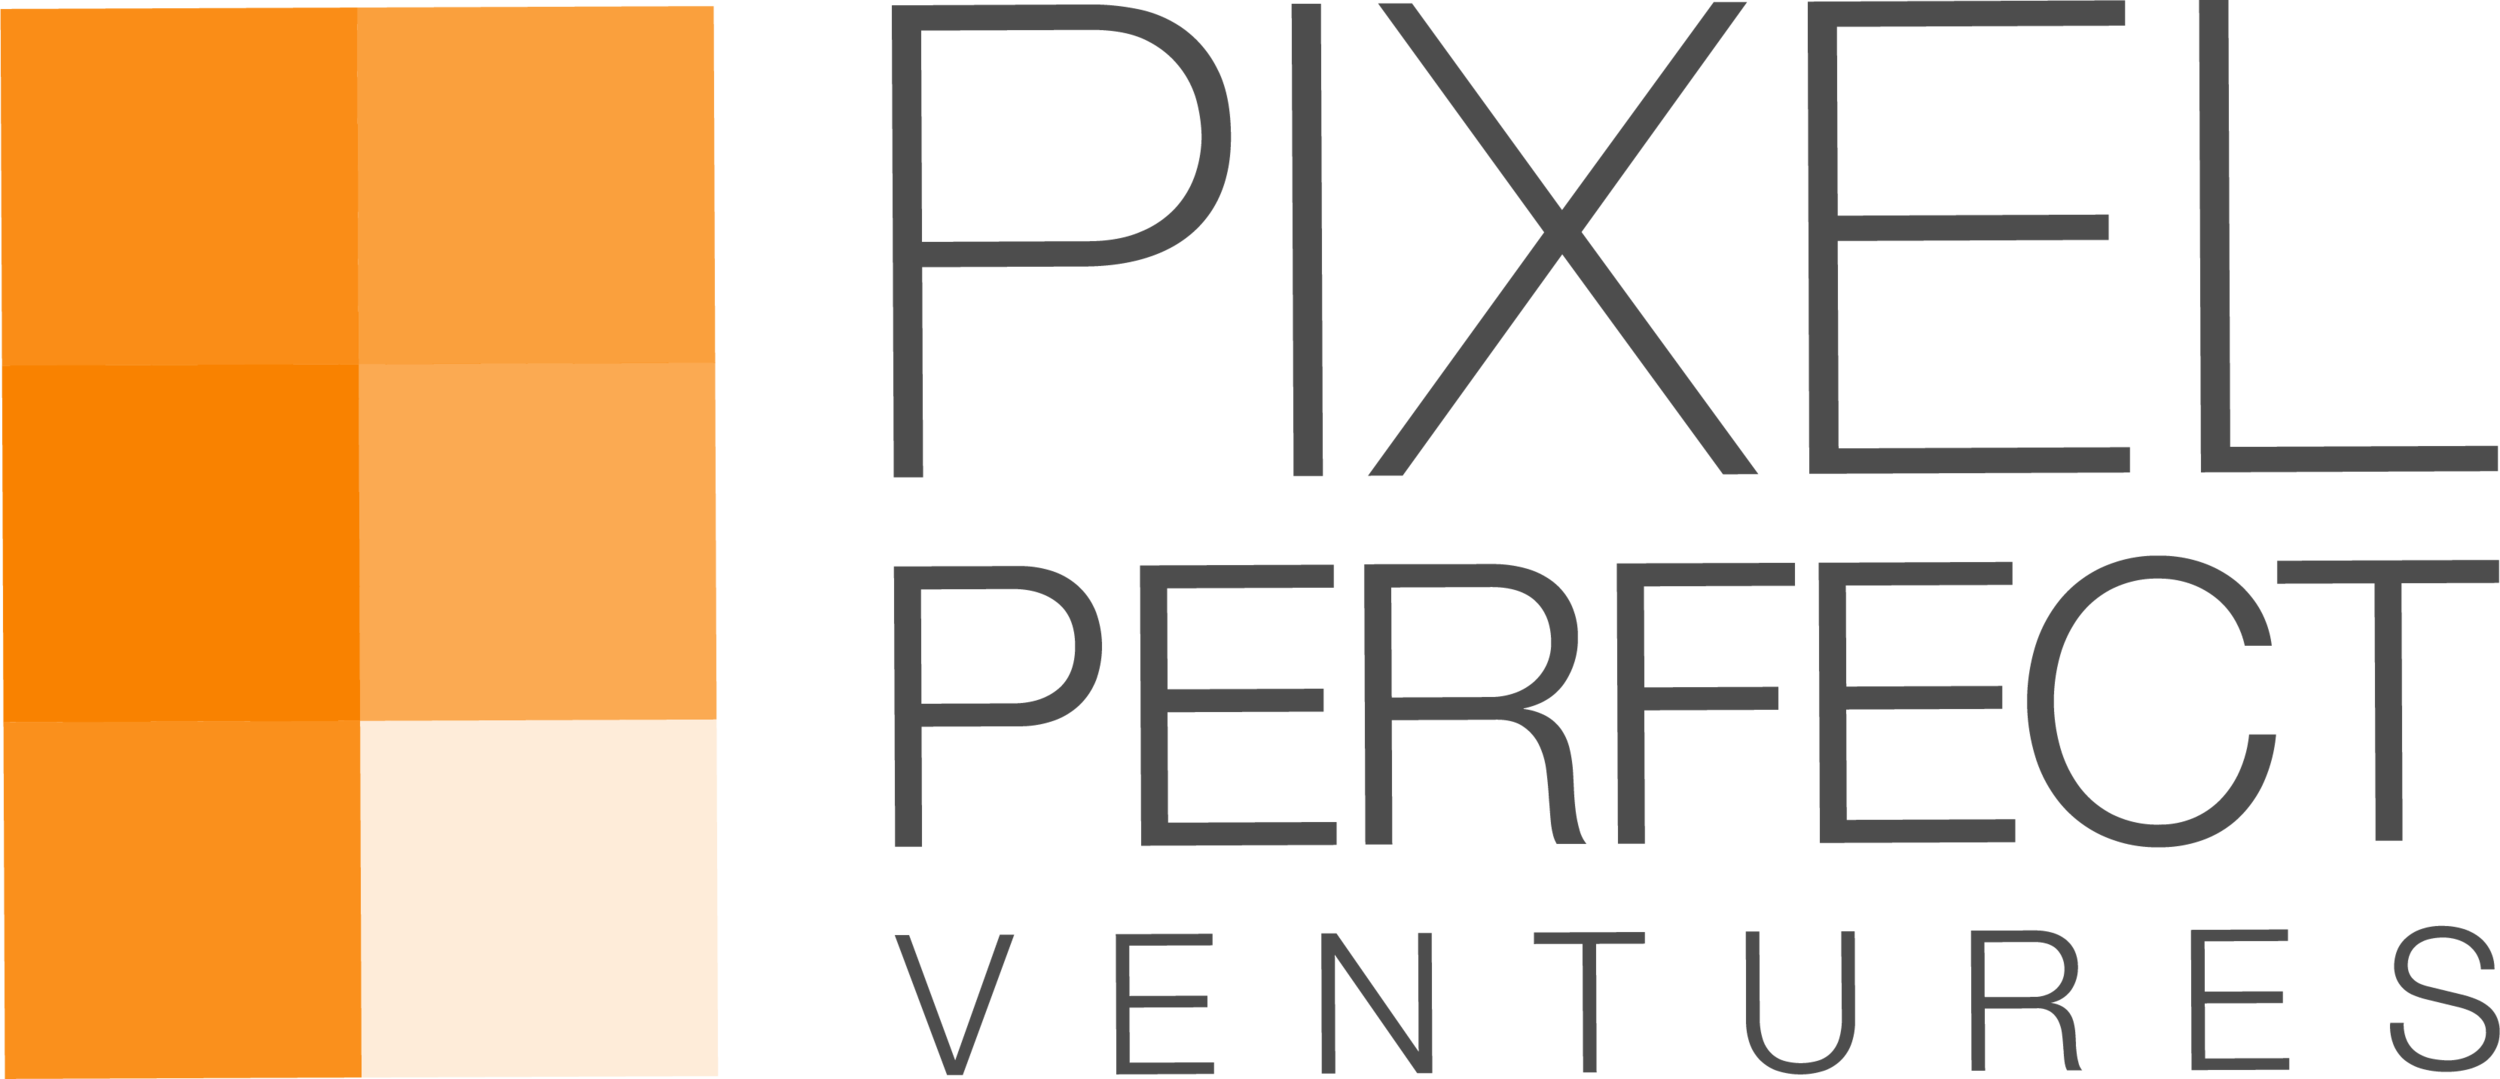 PIxel Perfect Ventures.png